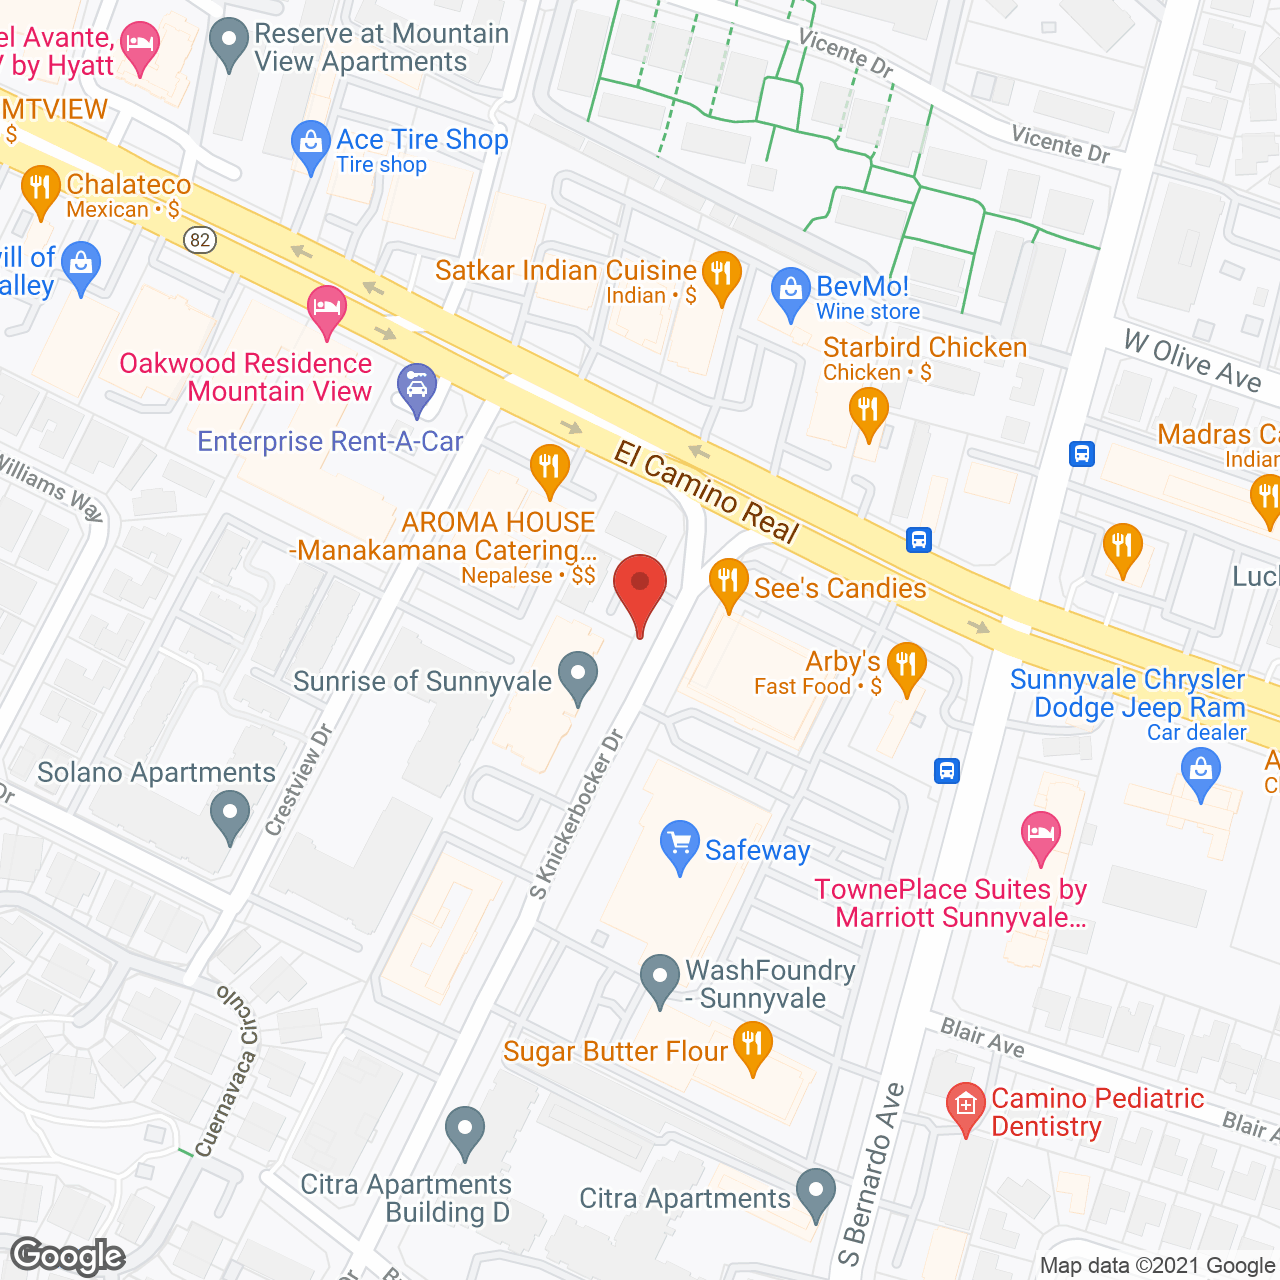 Sunrise of Sunnyvale in google map